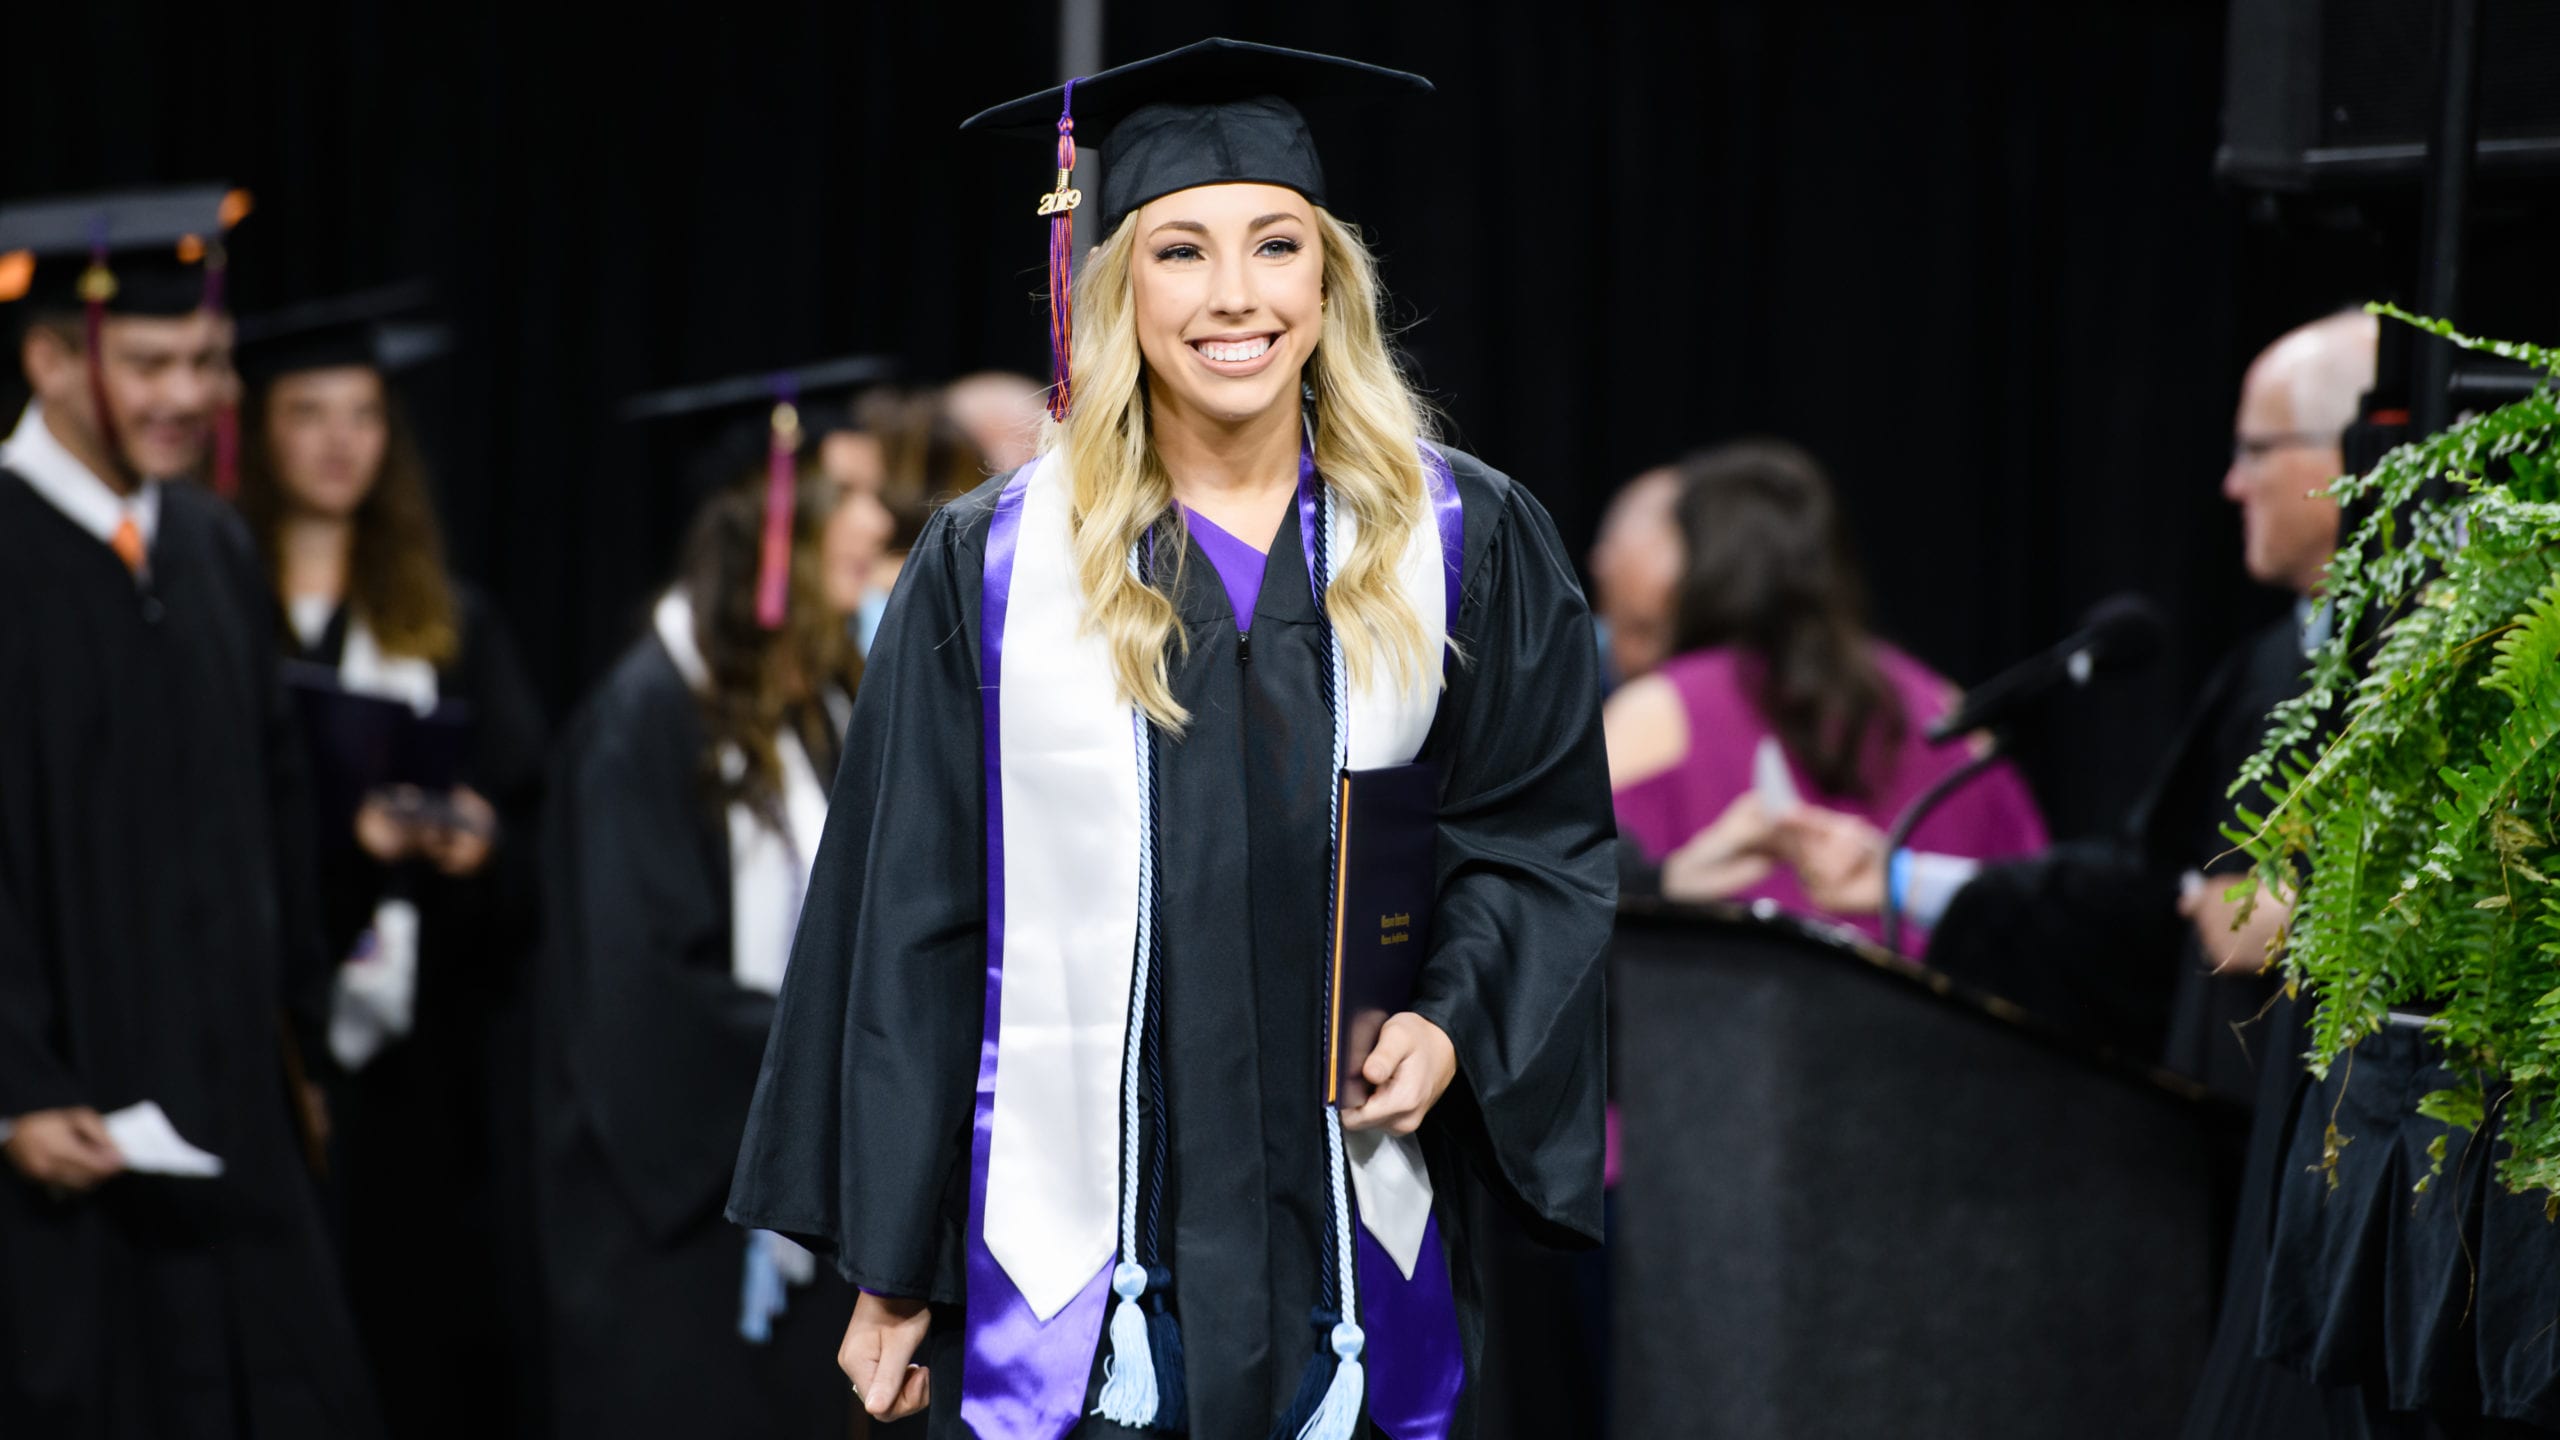 Makayla Stark earns her undergraduate psychology degree in May 2019